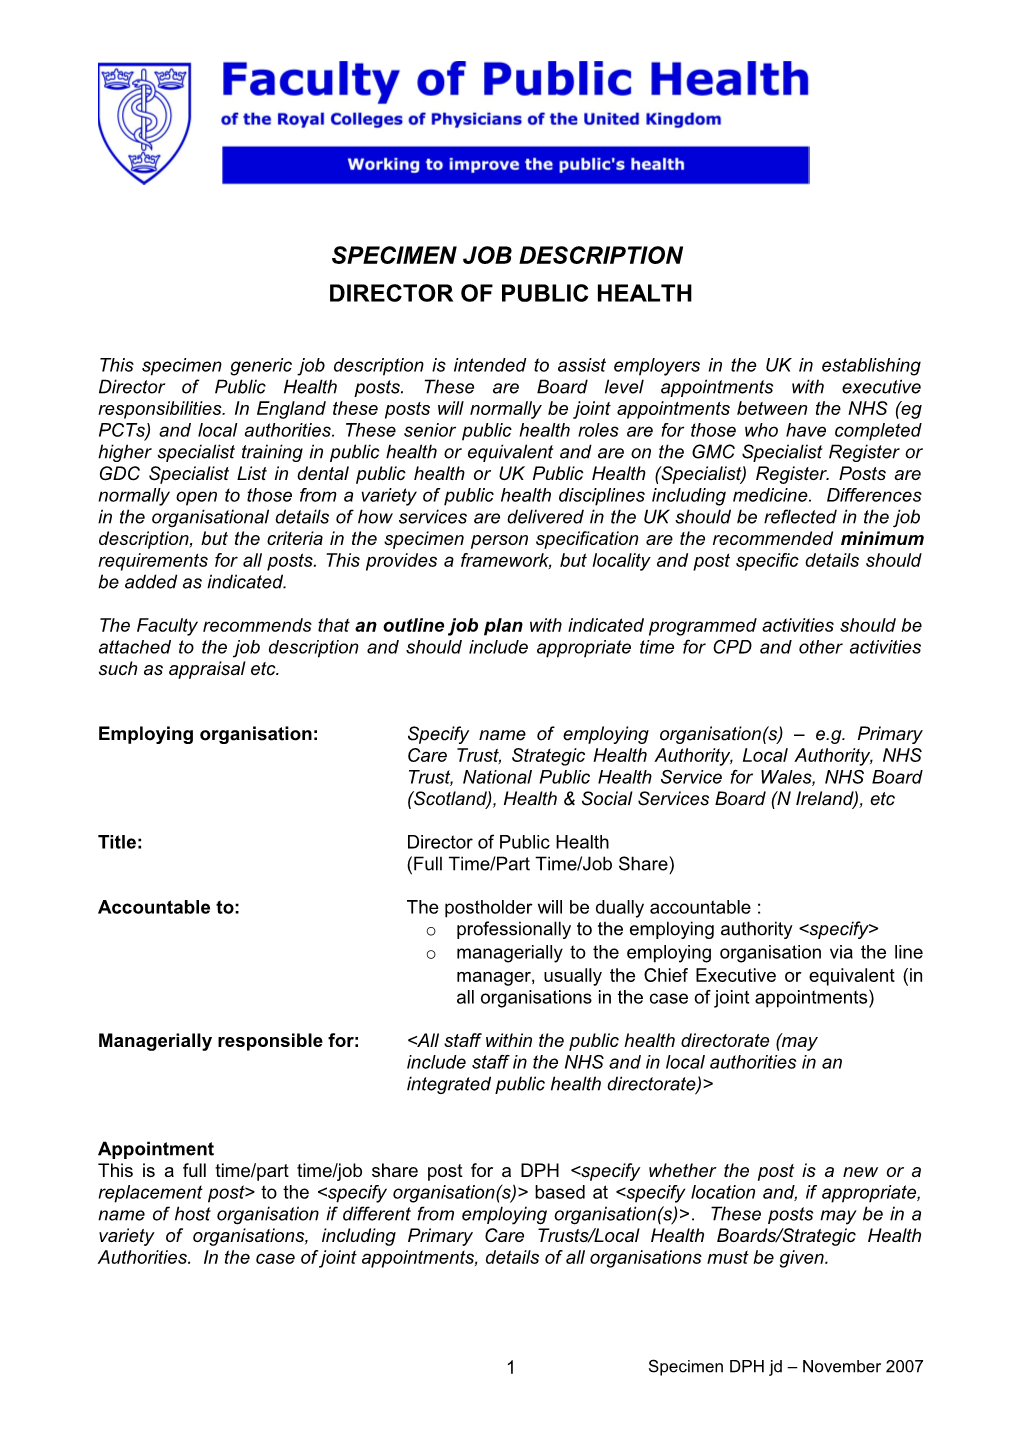 Specimen Job Description